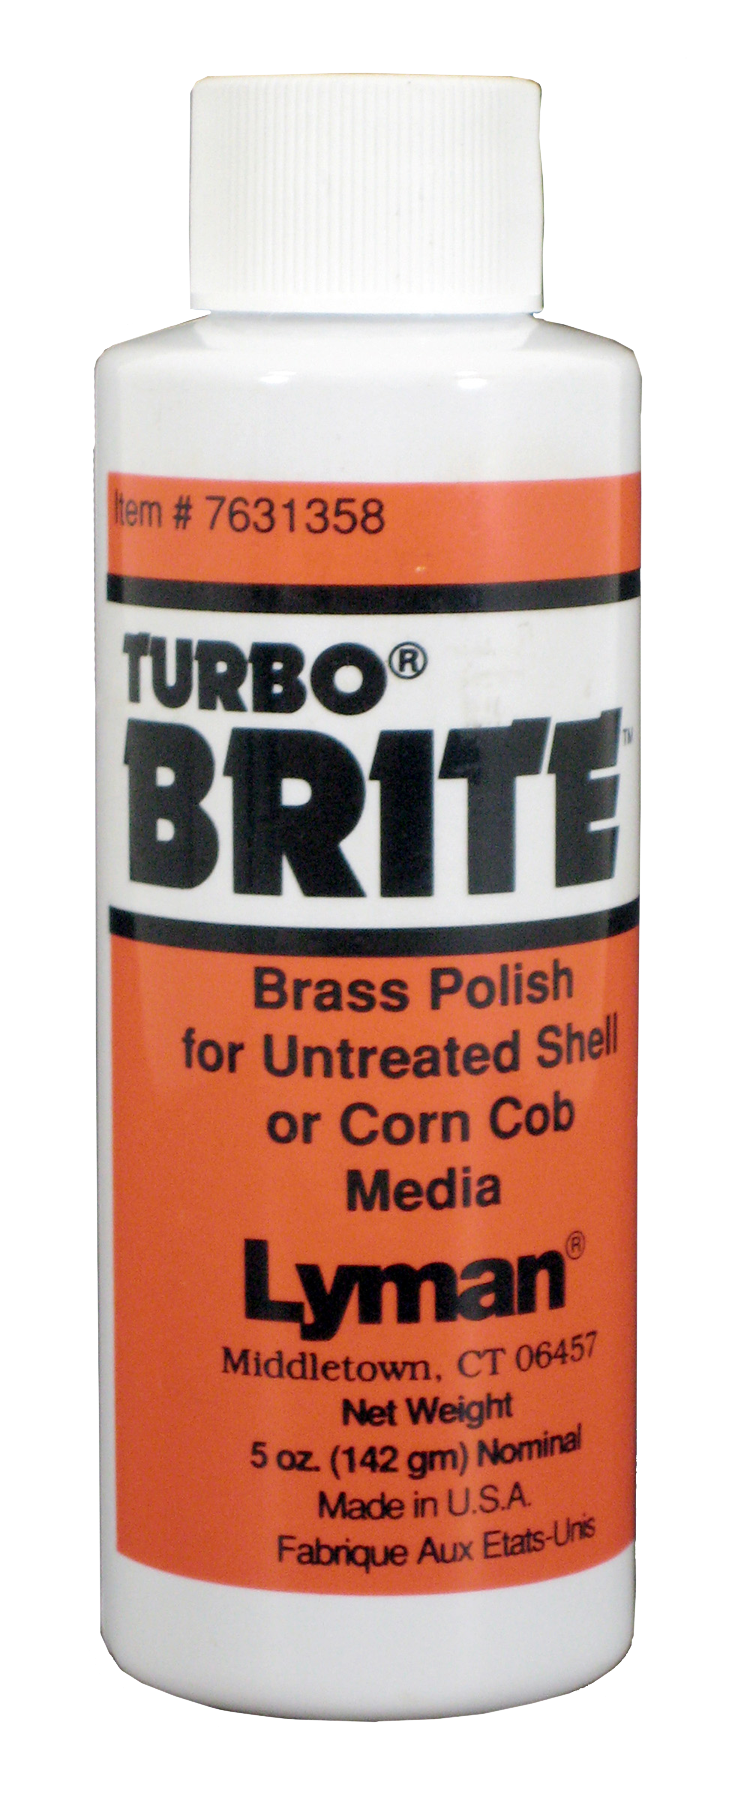 Cabela's Corn Cob Media and Brass Case Polish Combo